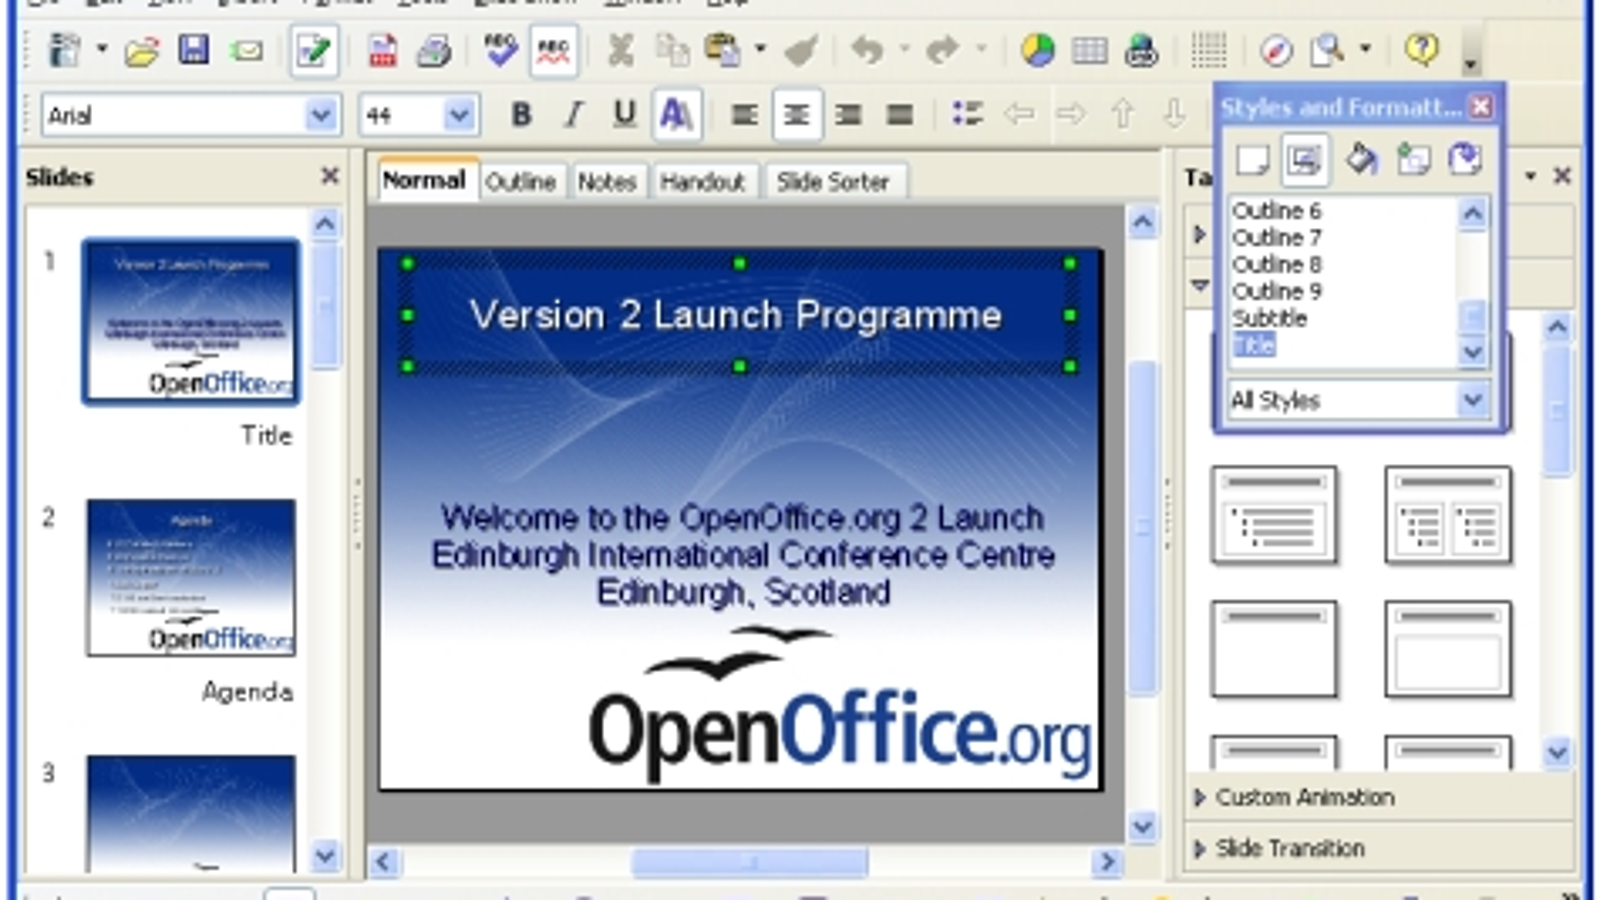 download open office 2021